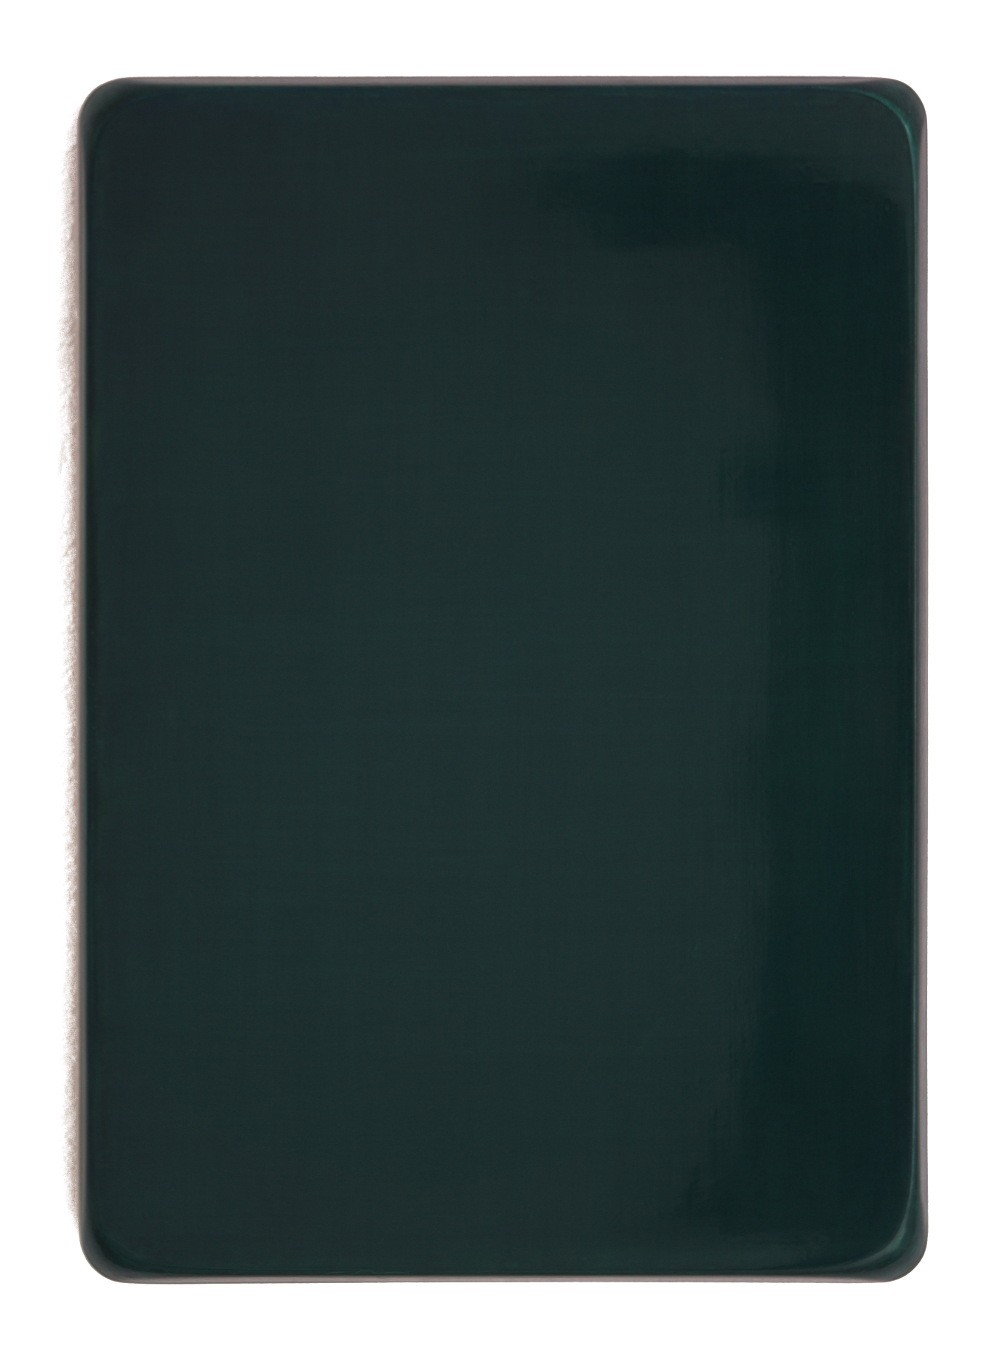 o.T. / Neutralgrau, Helioceolinblau, Heliotürkis, Chromoxidgrün feurig, Perlglanz Pyrisma grün, Aquarell auf Gips und Medium, 35 x 25 cm, 2013